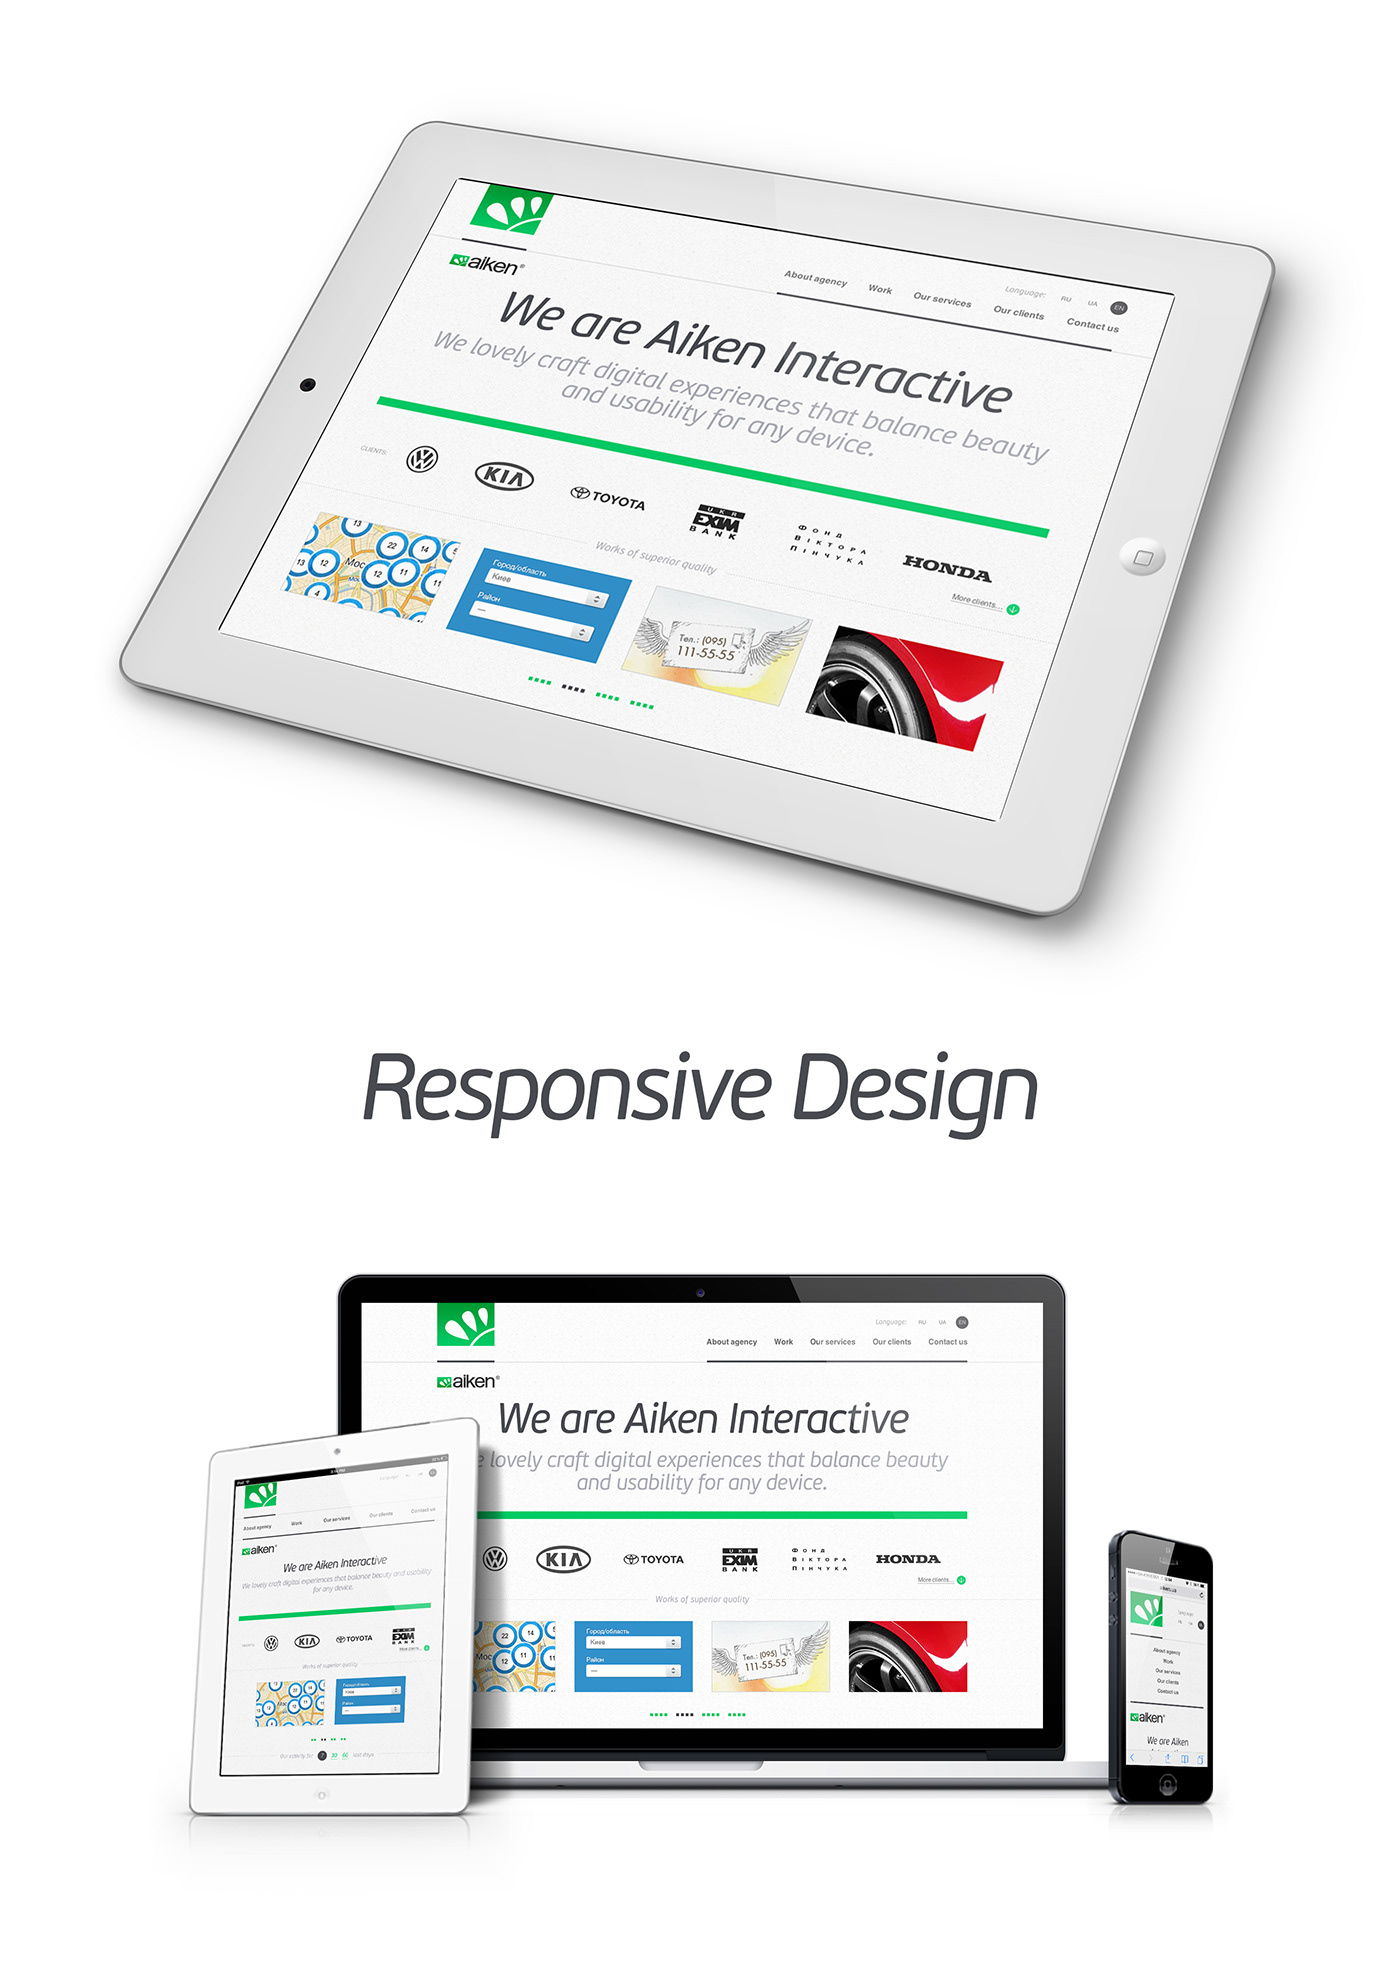 Adobe Portfolio aiken agency interaction Responsive digital interactive web design agency digital agency Interactive Agency web services development internet promotion